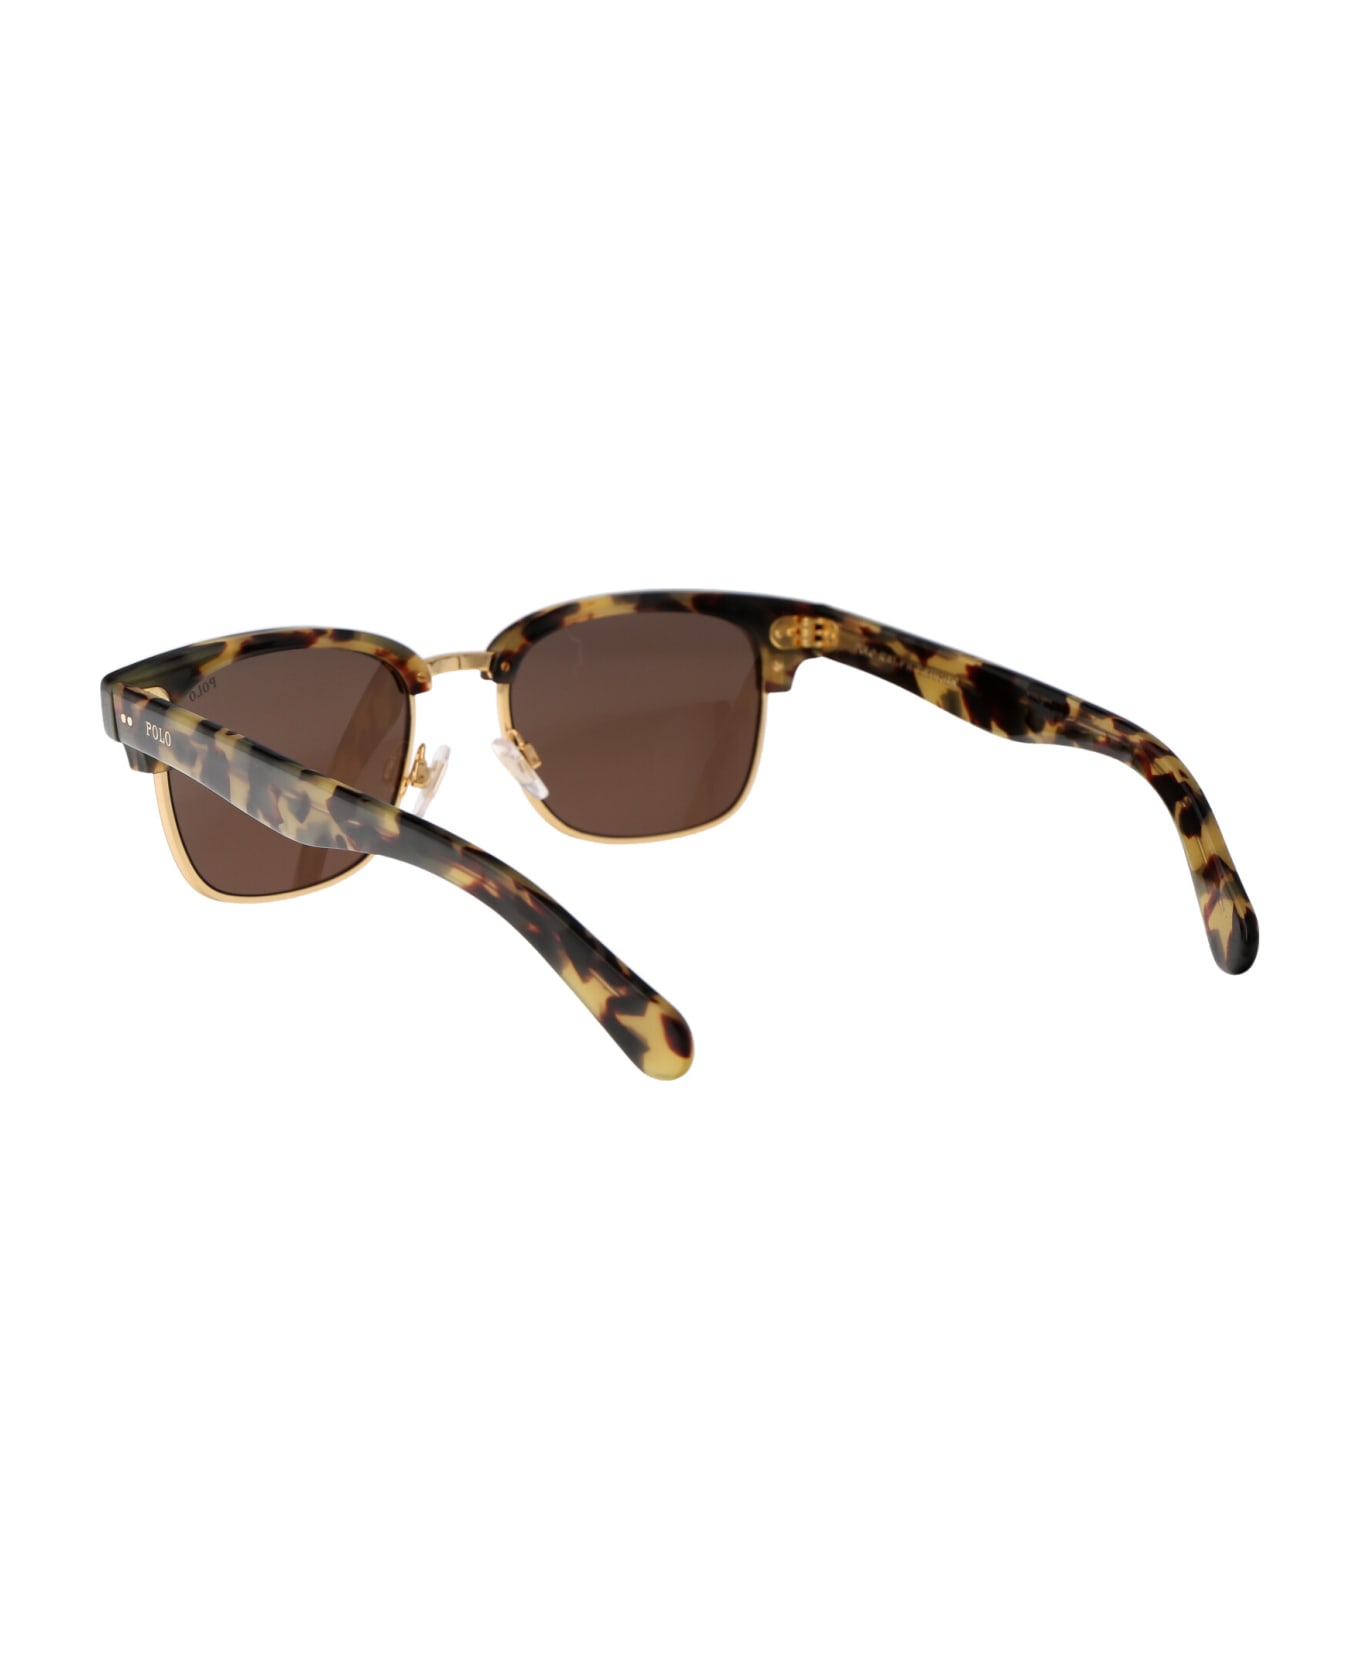 Polo Ralph Lauren 0ph4202 Sunglasses - 608773 Shiny Camo Havana サングラス